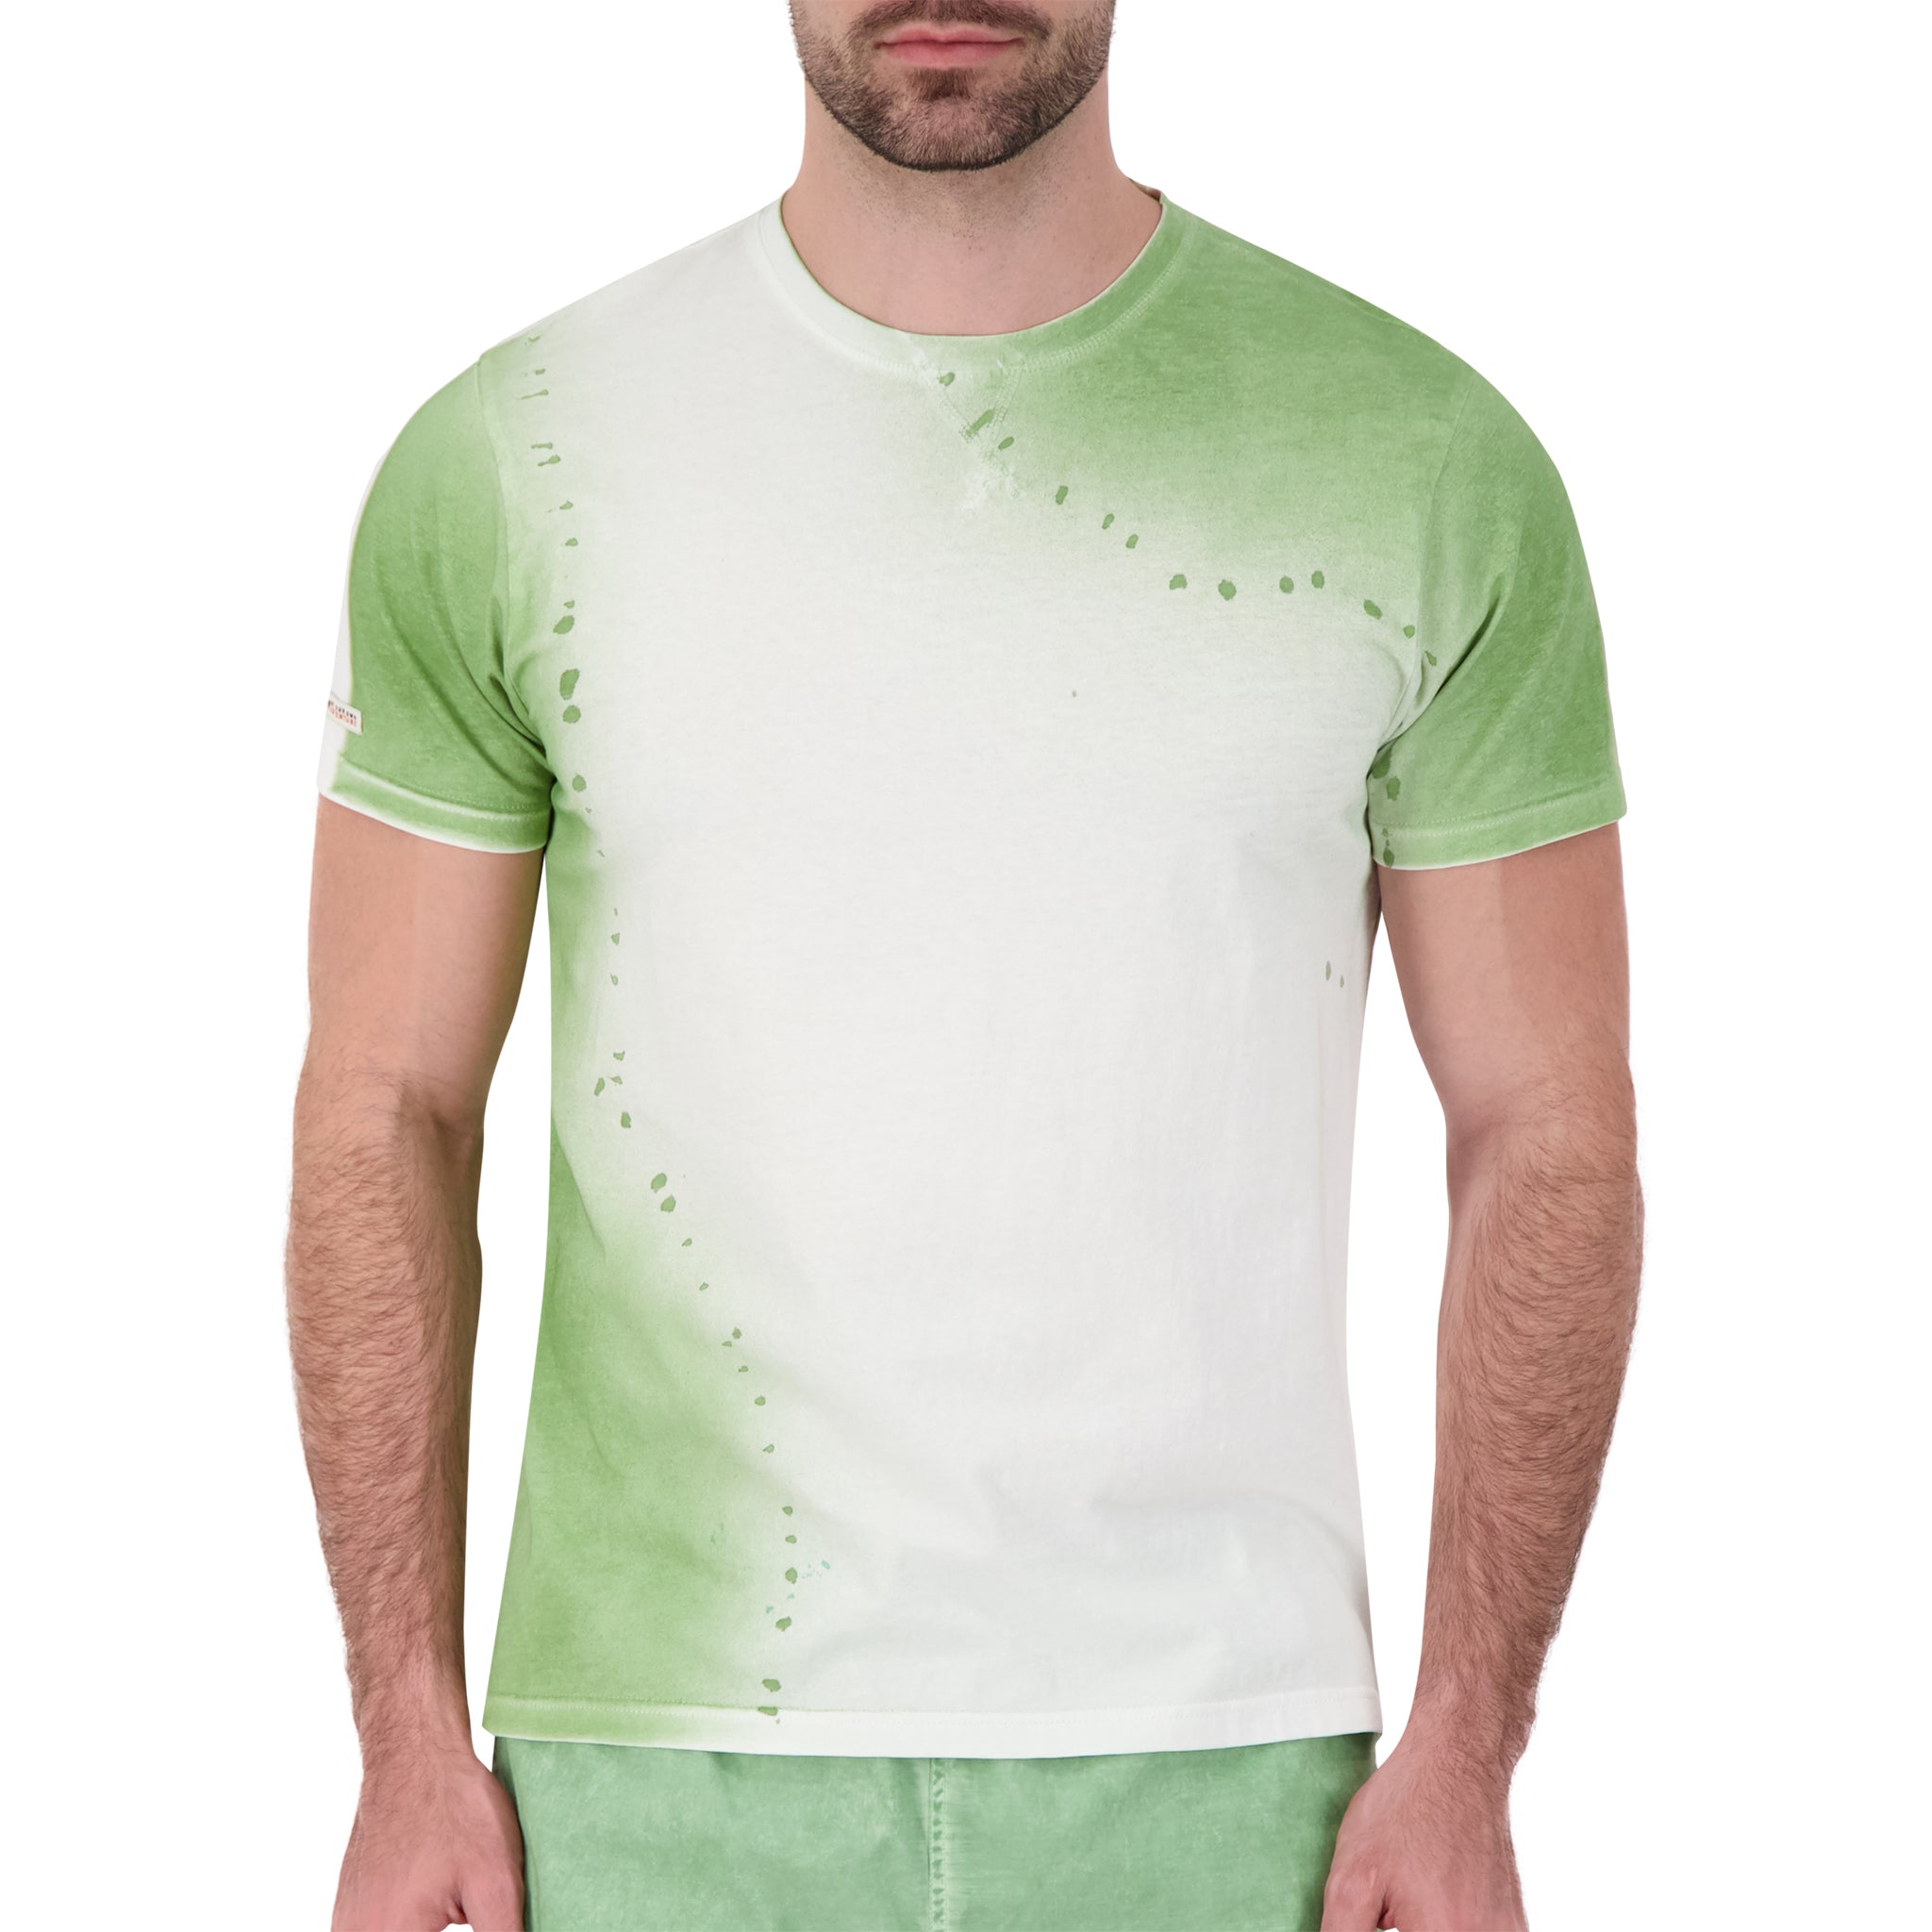 Splatter & Spray T-Shirt in Olive